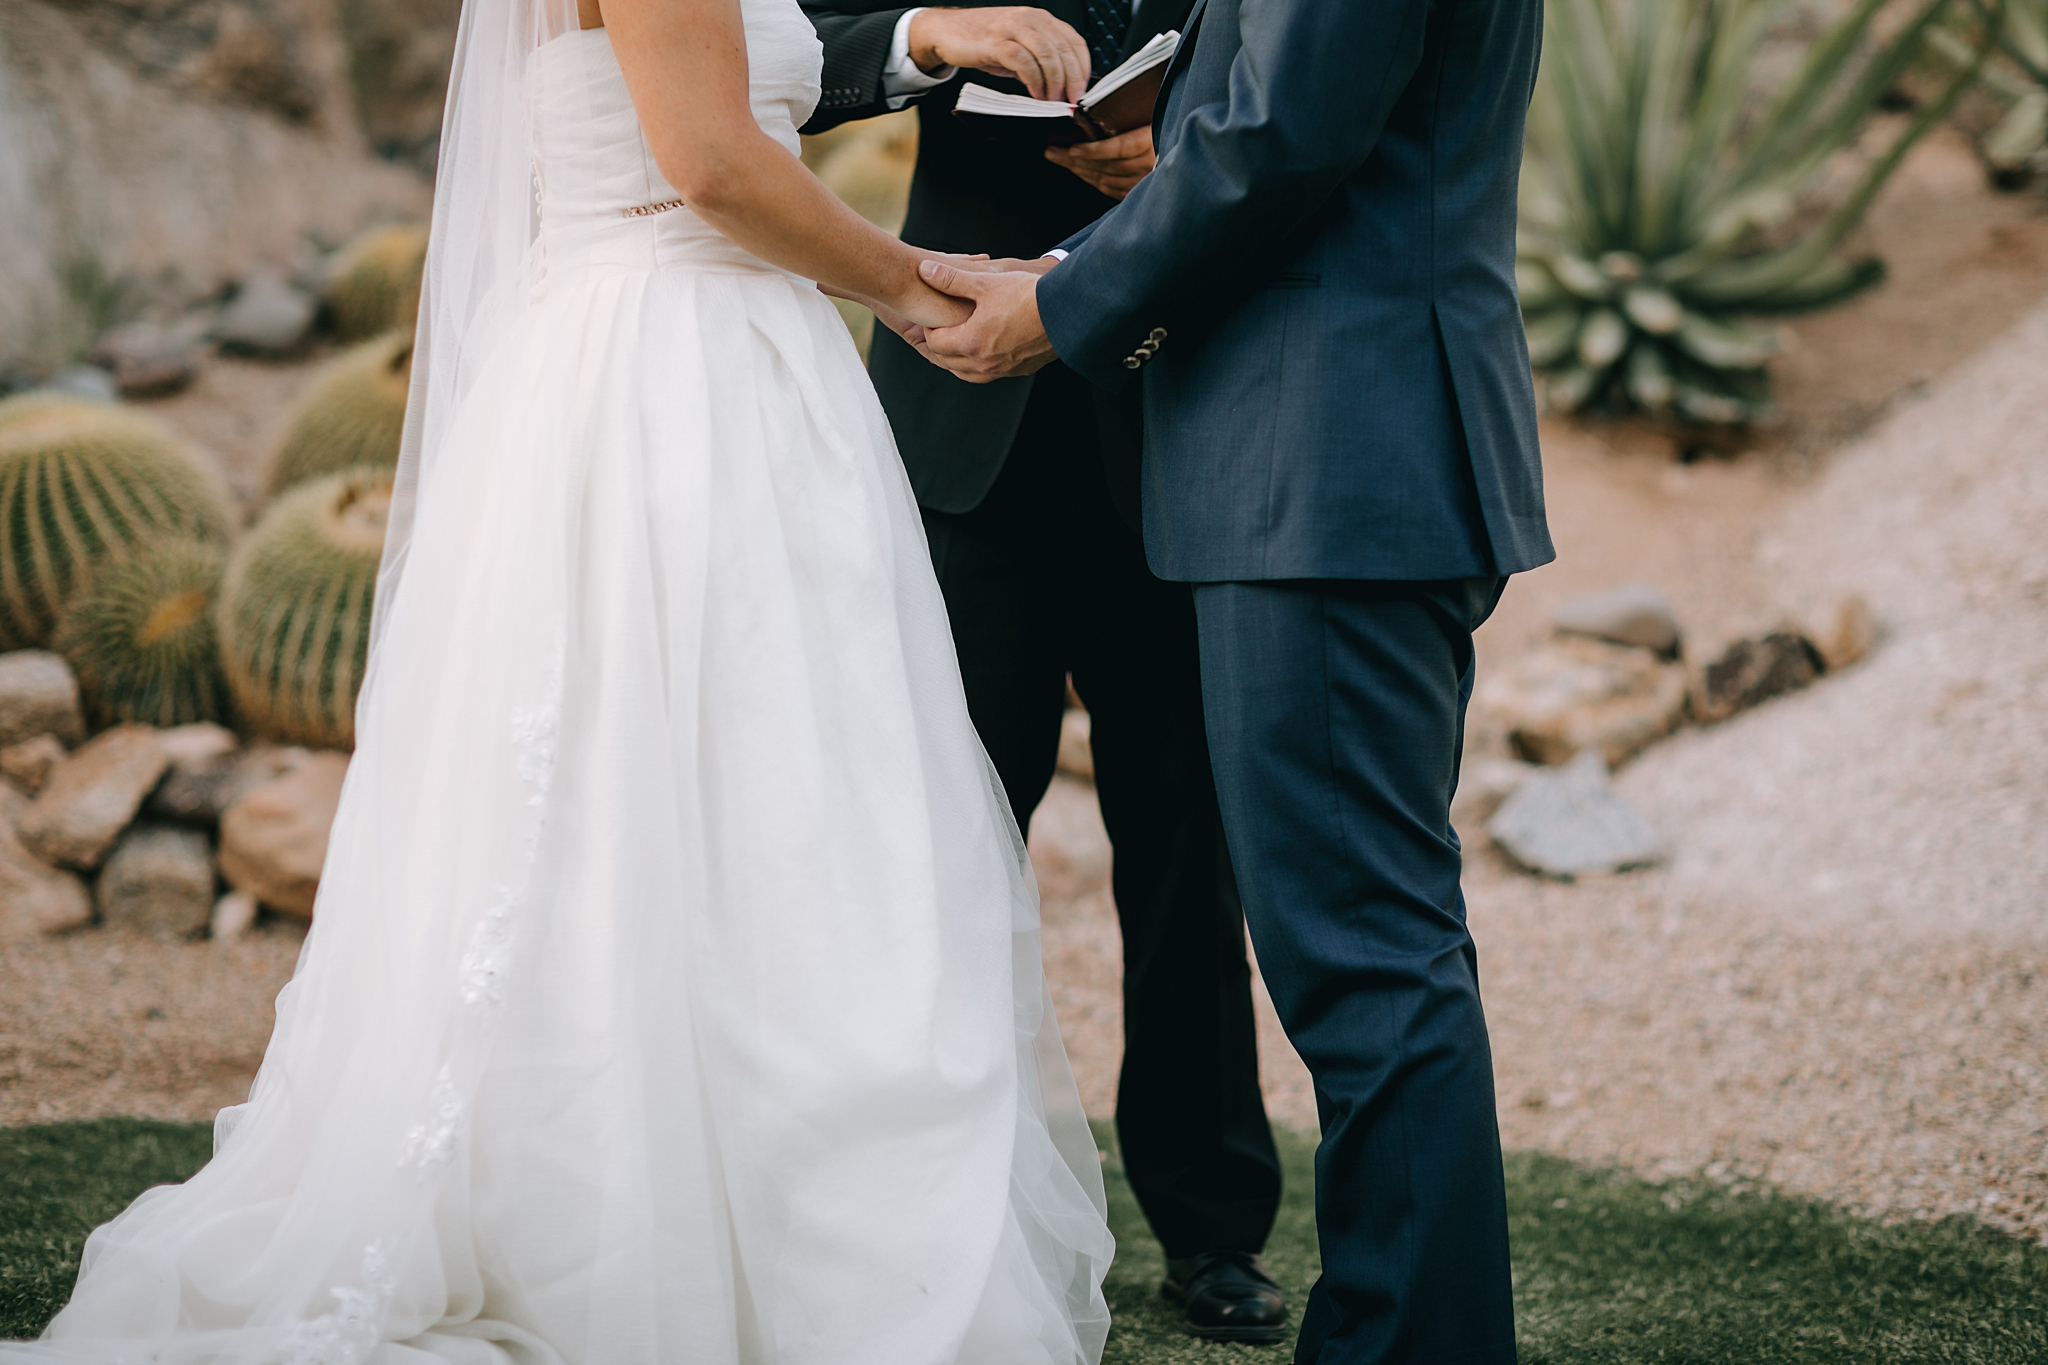 Phoenix Wedding Photographer, Scottsdale Wedding Photographer, The Boulders Wedding, The Boulders Wedding Photographer, Arizona Wedding Photographer, Outdoor Wedding Photographer, The Hoskins Photography